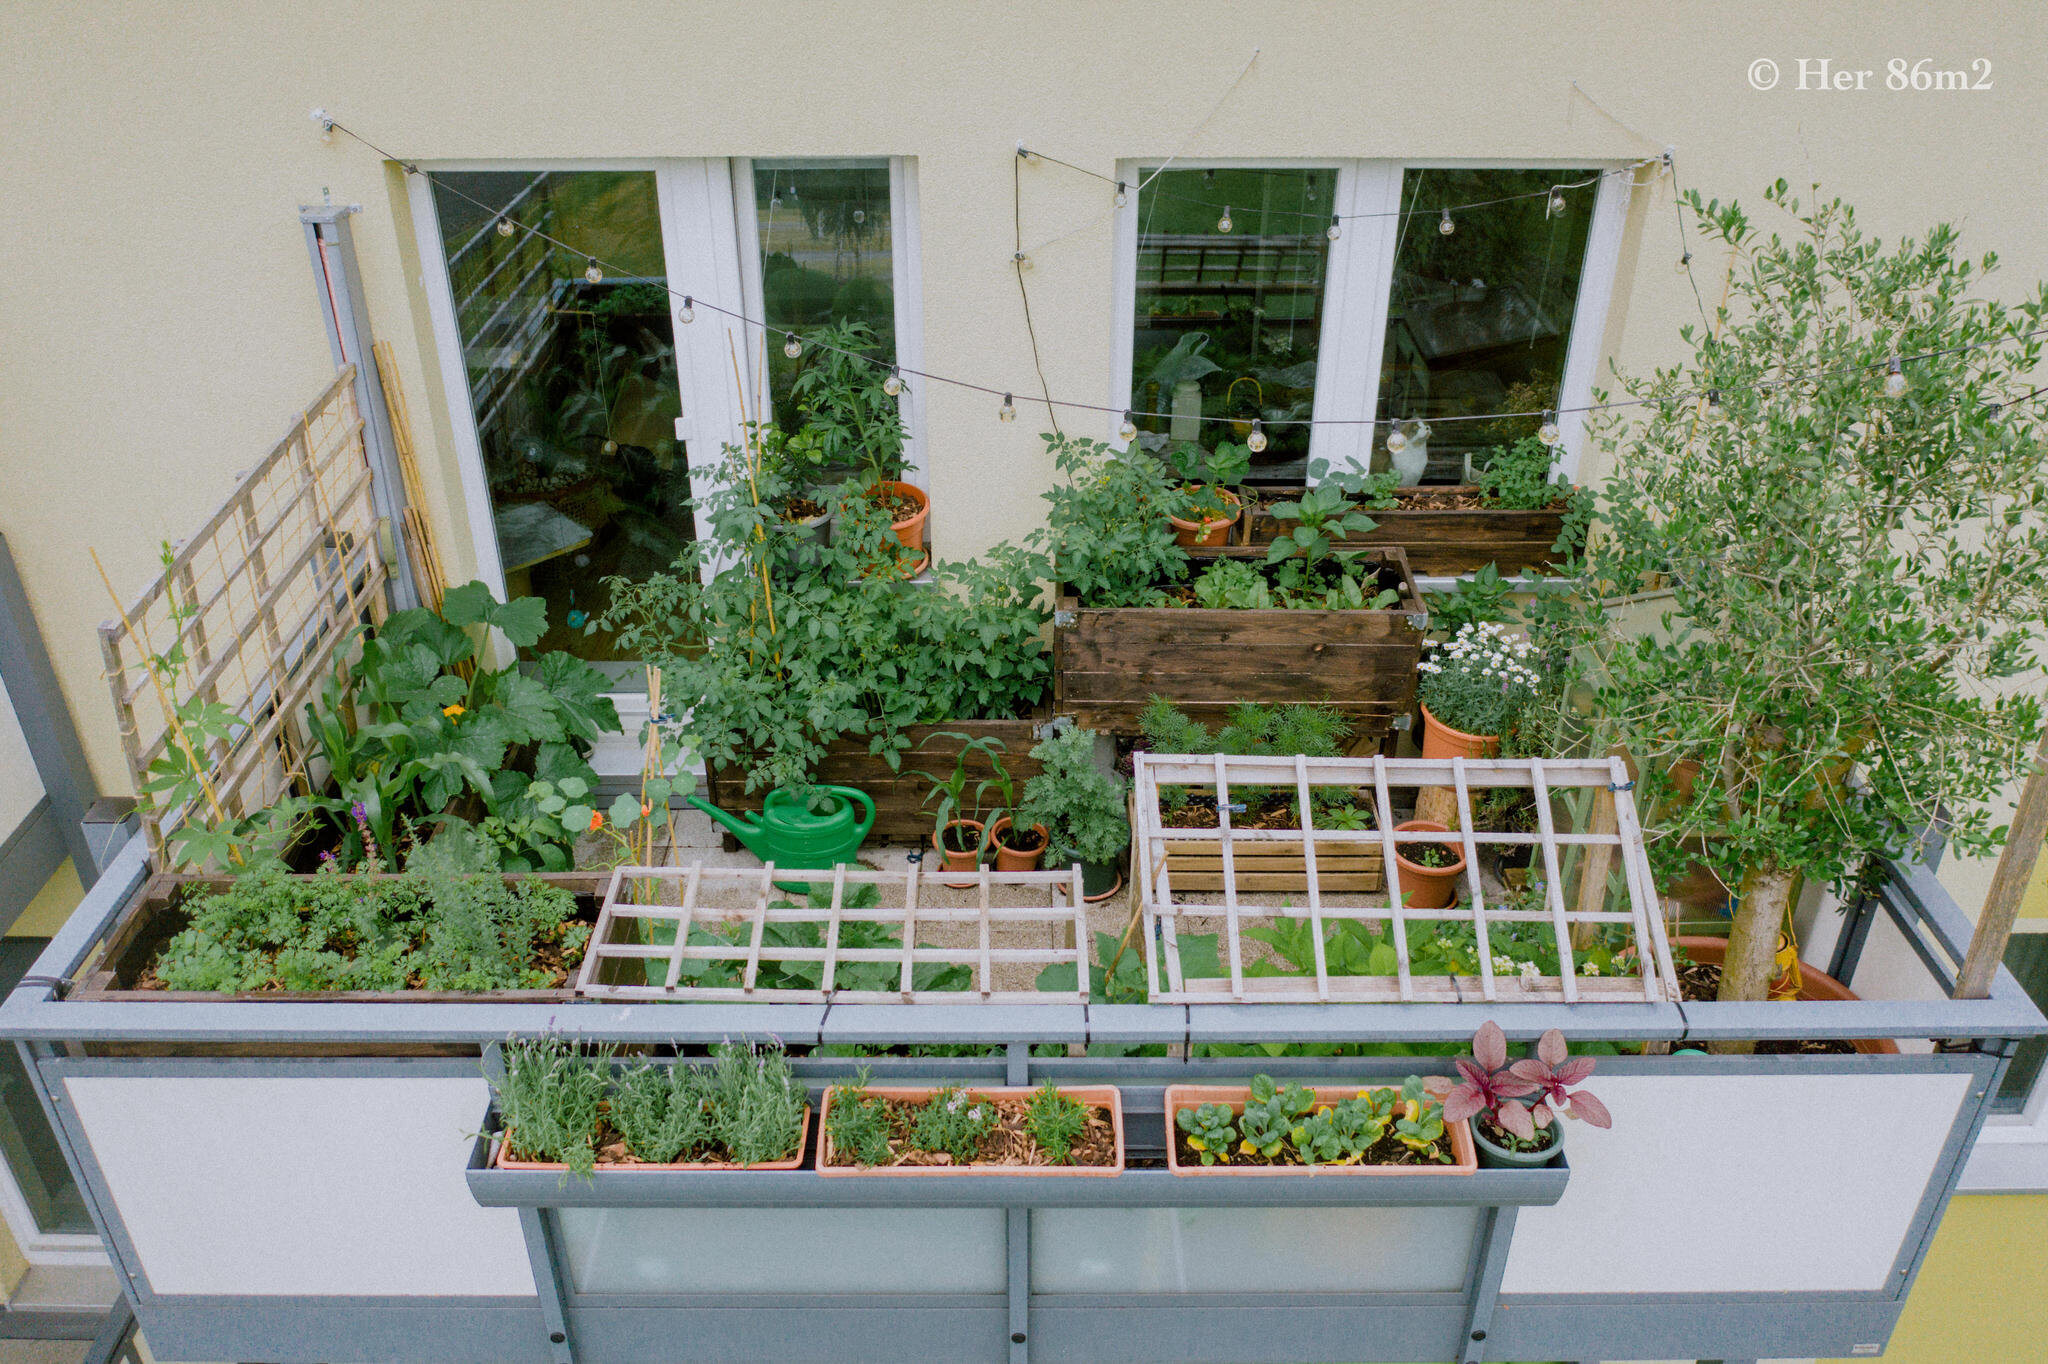 Her 86m2 - My 8m² Balcony Vegetable Garden | A Wonderful 200 Day Journey 151a.jpg